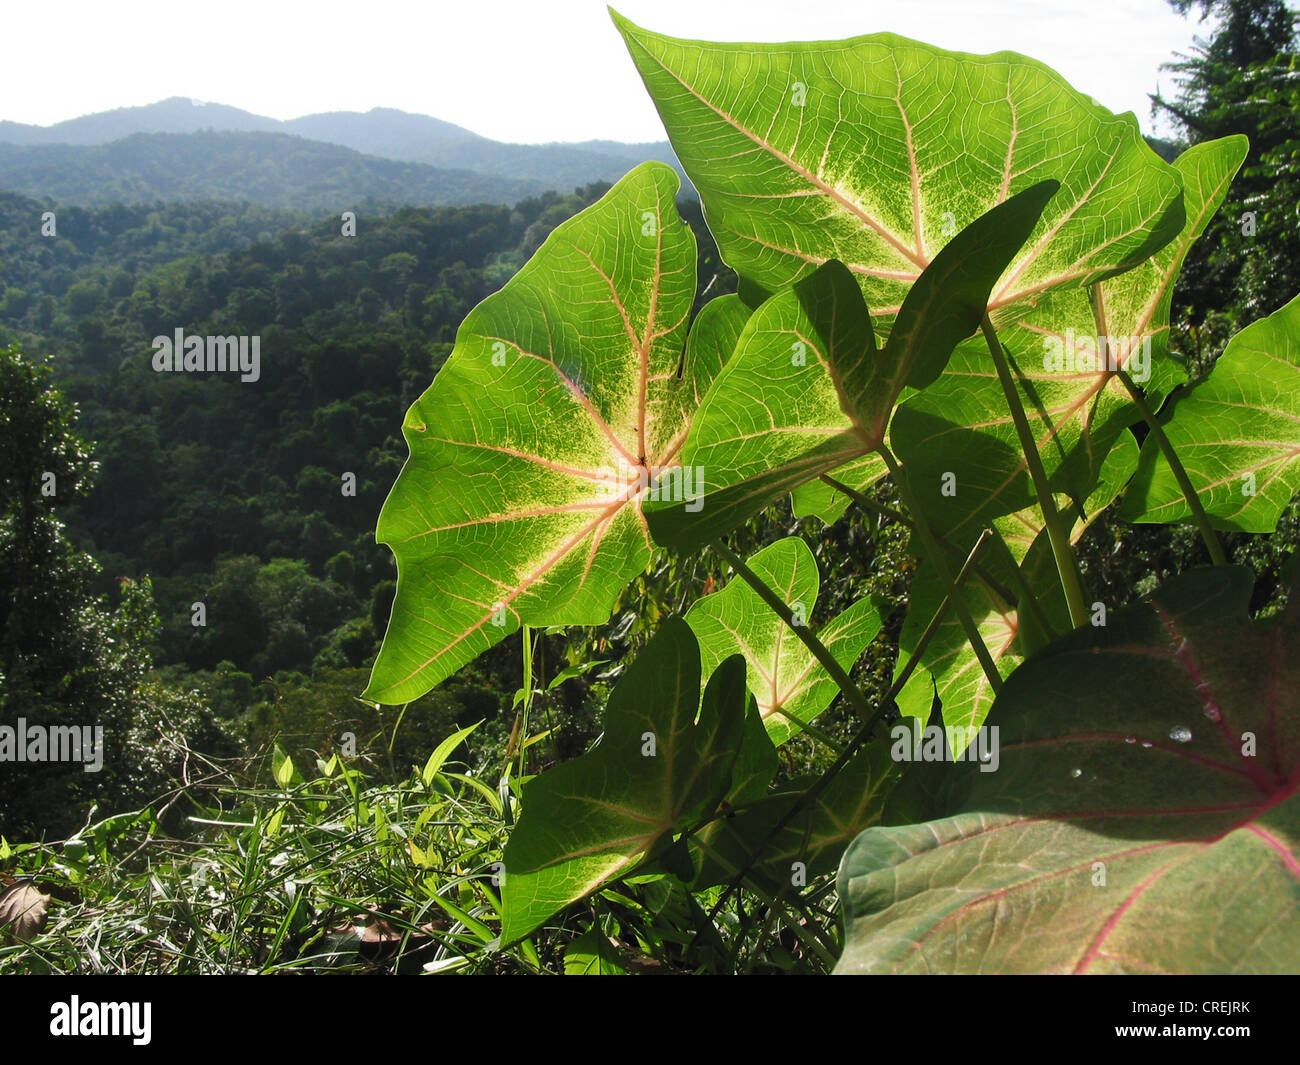 fancy-leafed caladium (Caladium bicolor), Large leaves, sun irradiated, almost transparent with fine veins on the carribean island Trinidad, Trinidad and Tobago, Trinidad Stock Photo